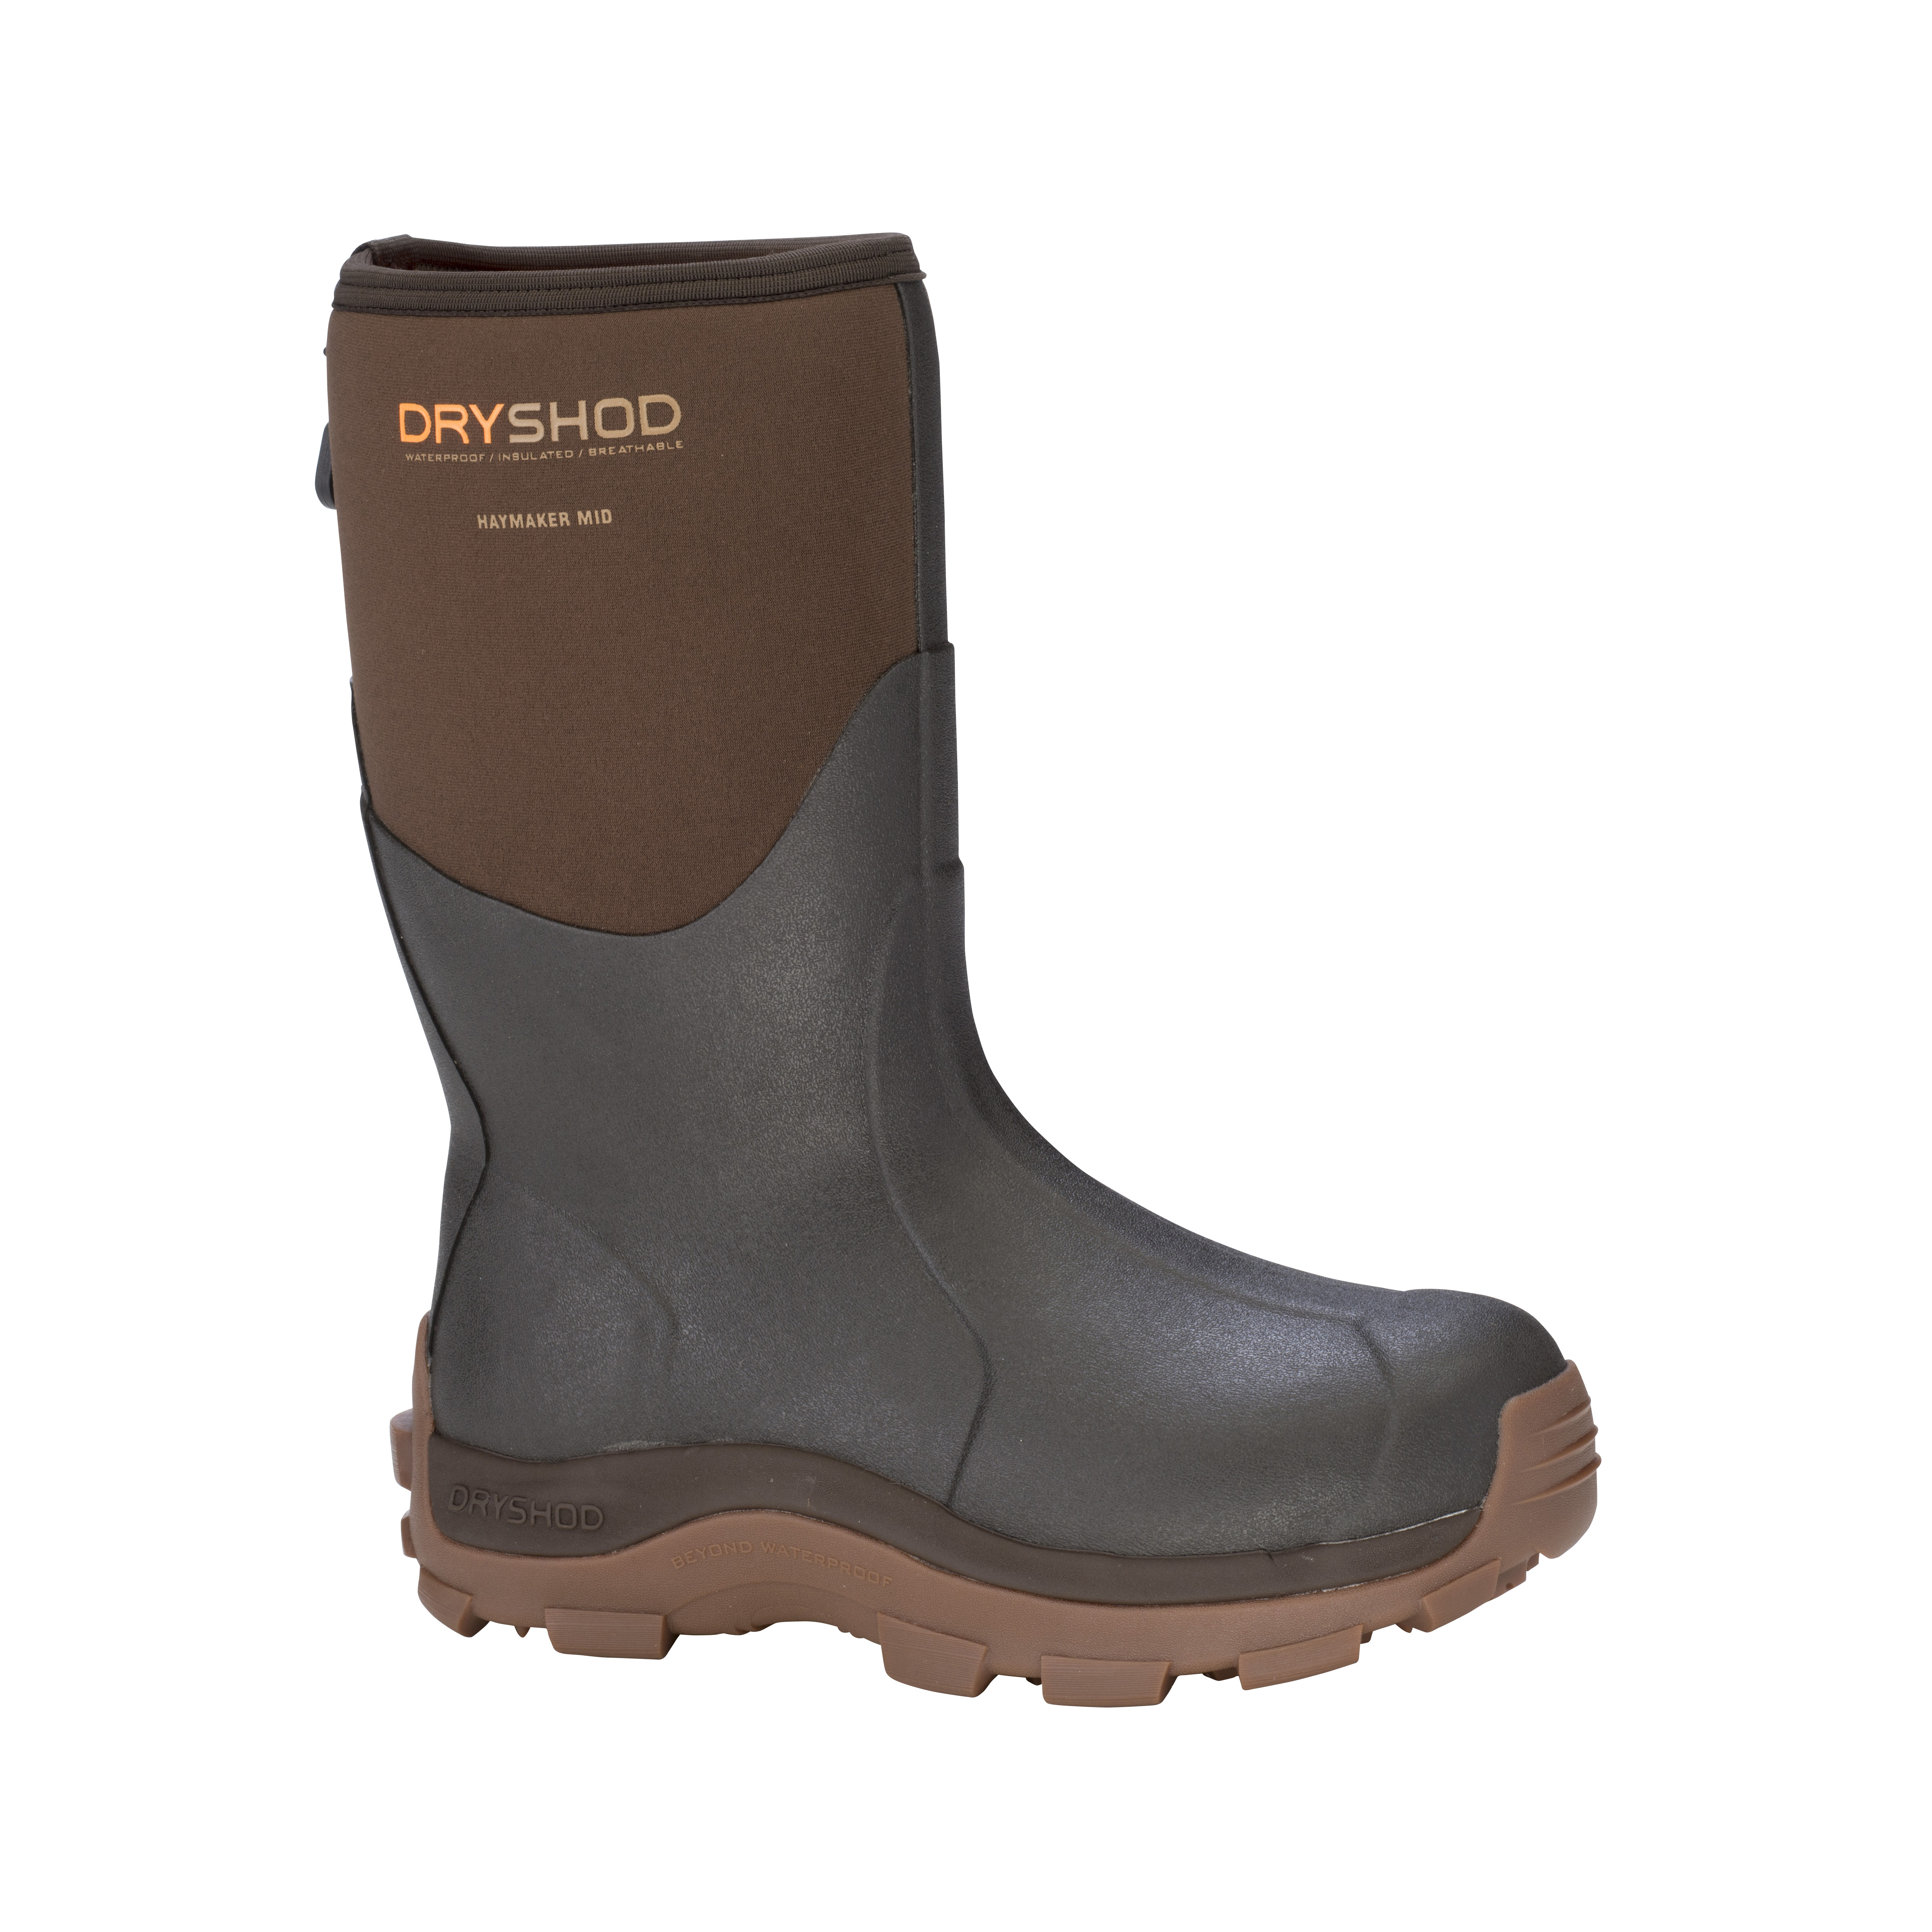 Haymaker Men's Hard-Working Farm Boots - Dryshod Waterproof Boots